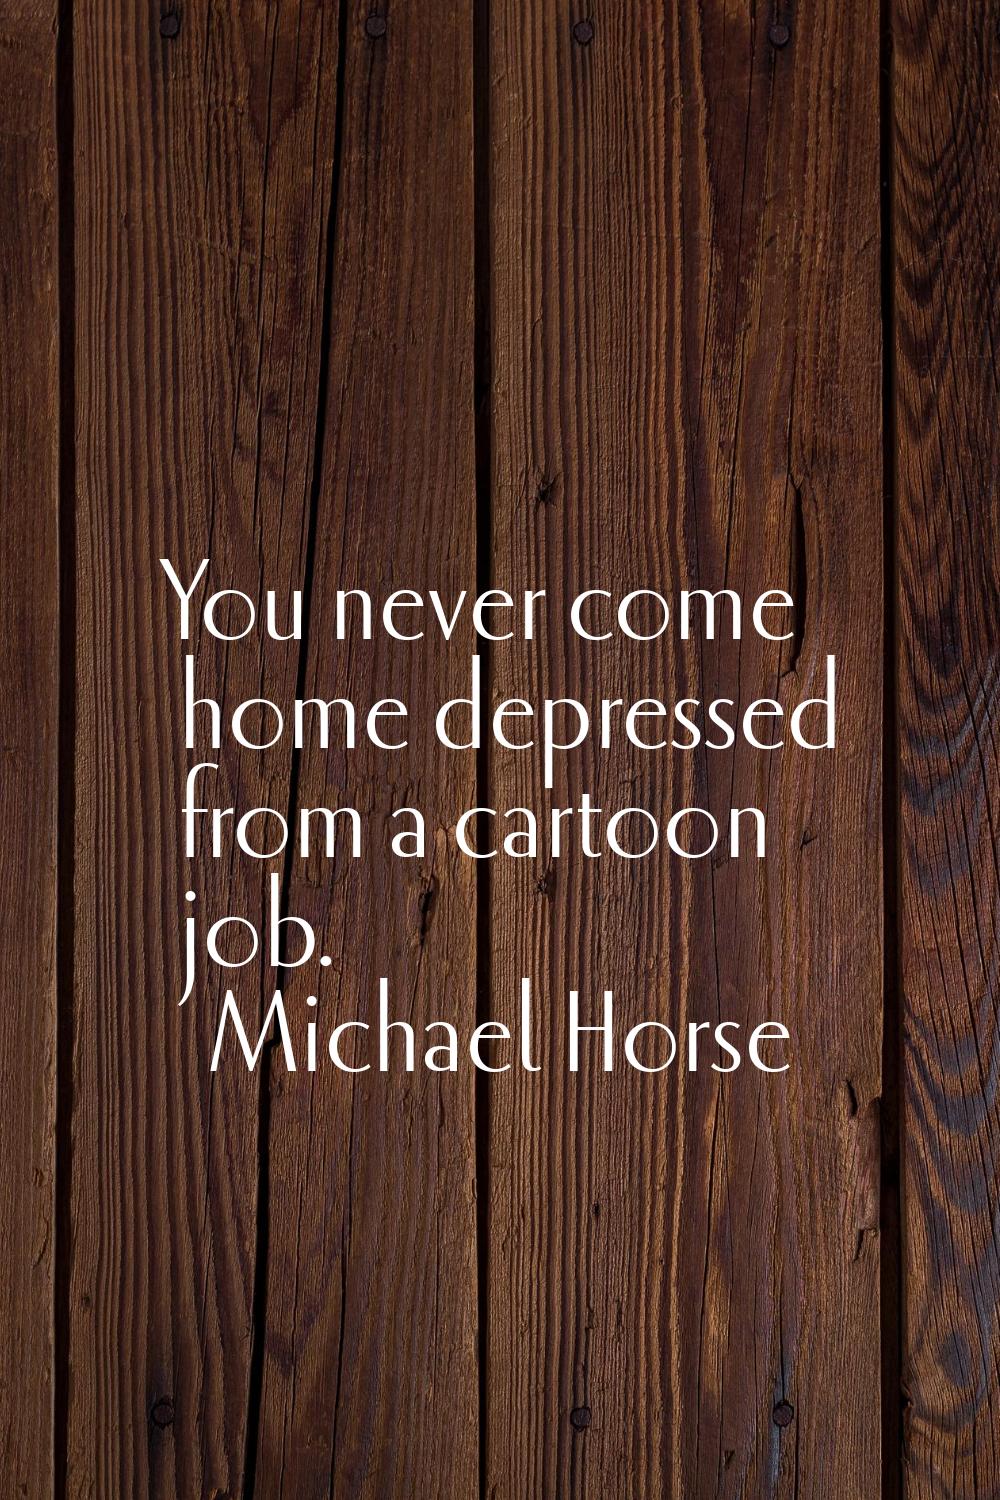 You never come home depressed from a cartoon job.